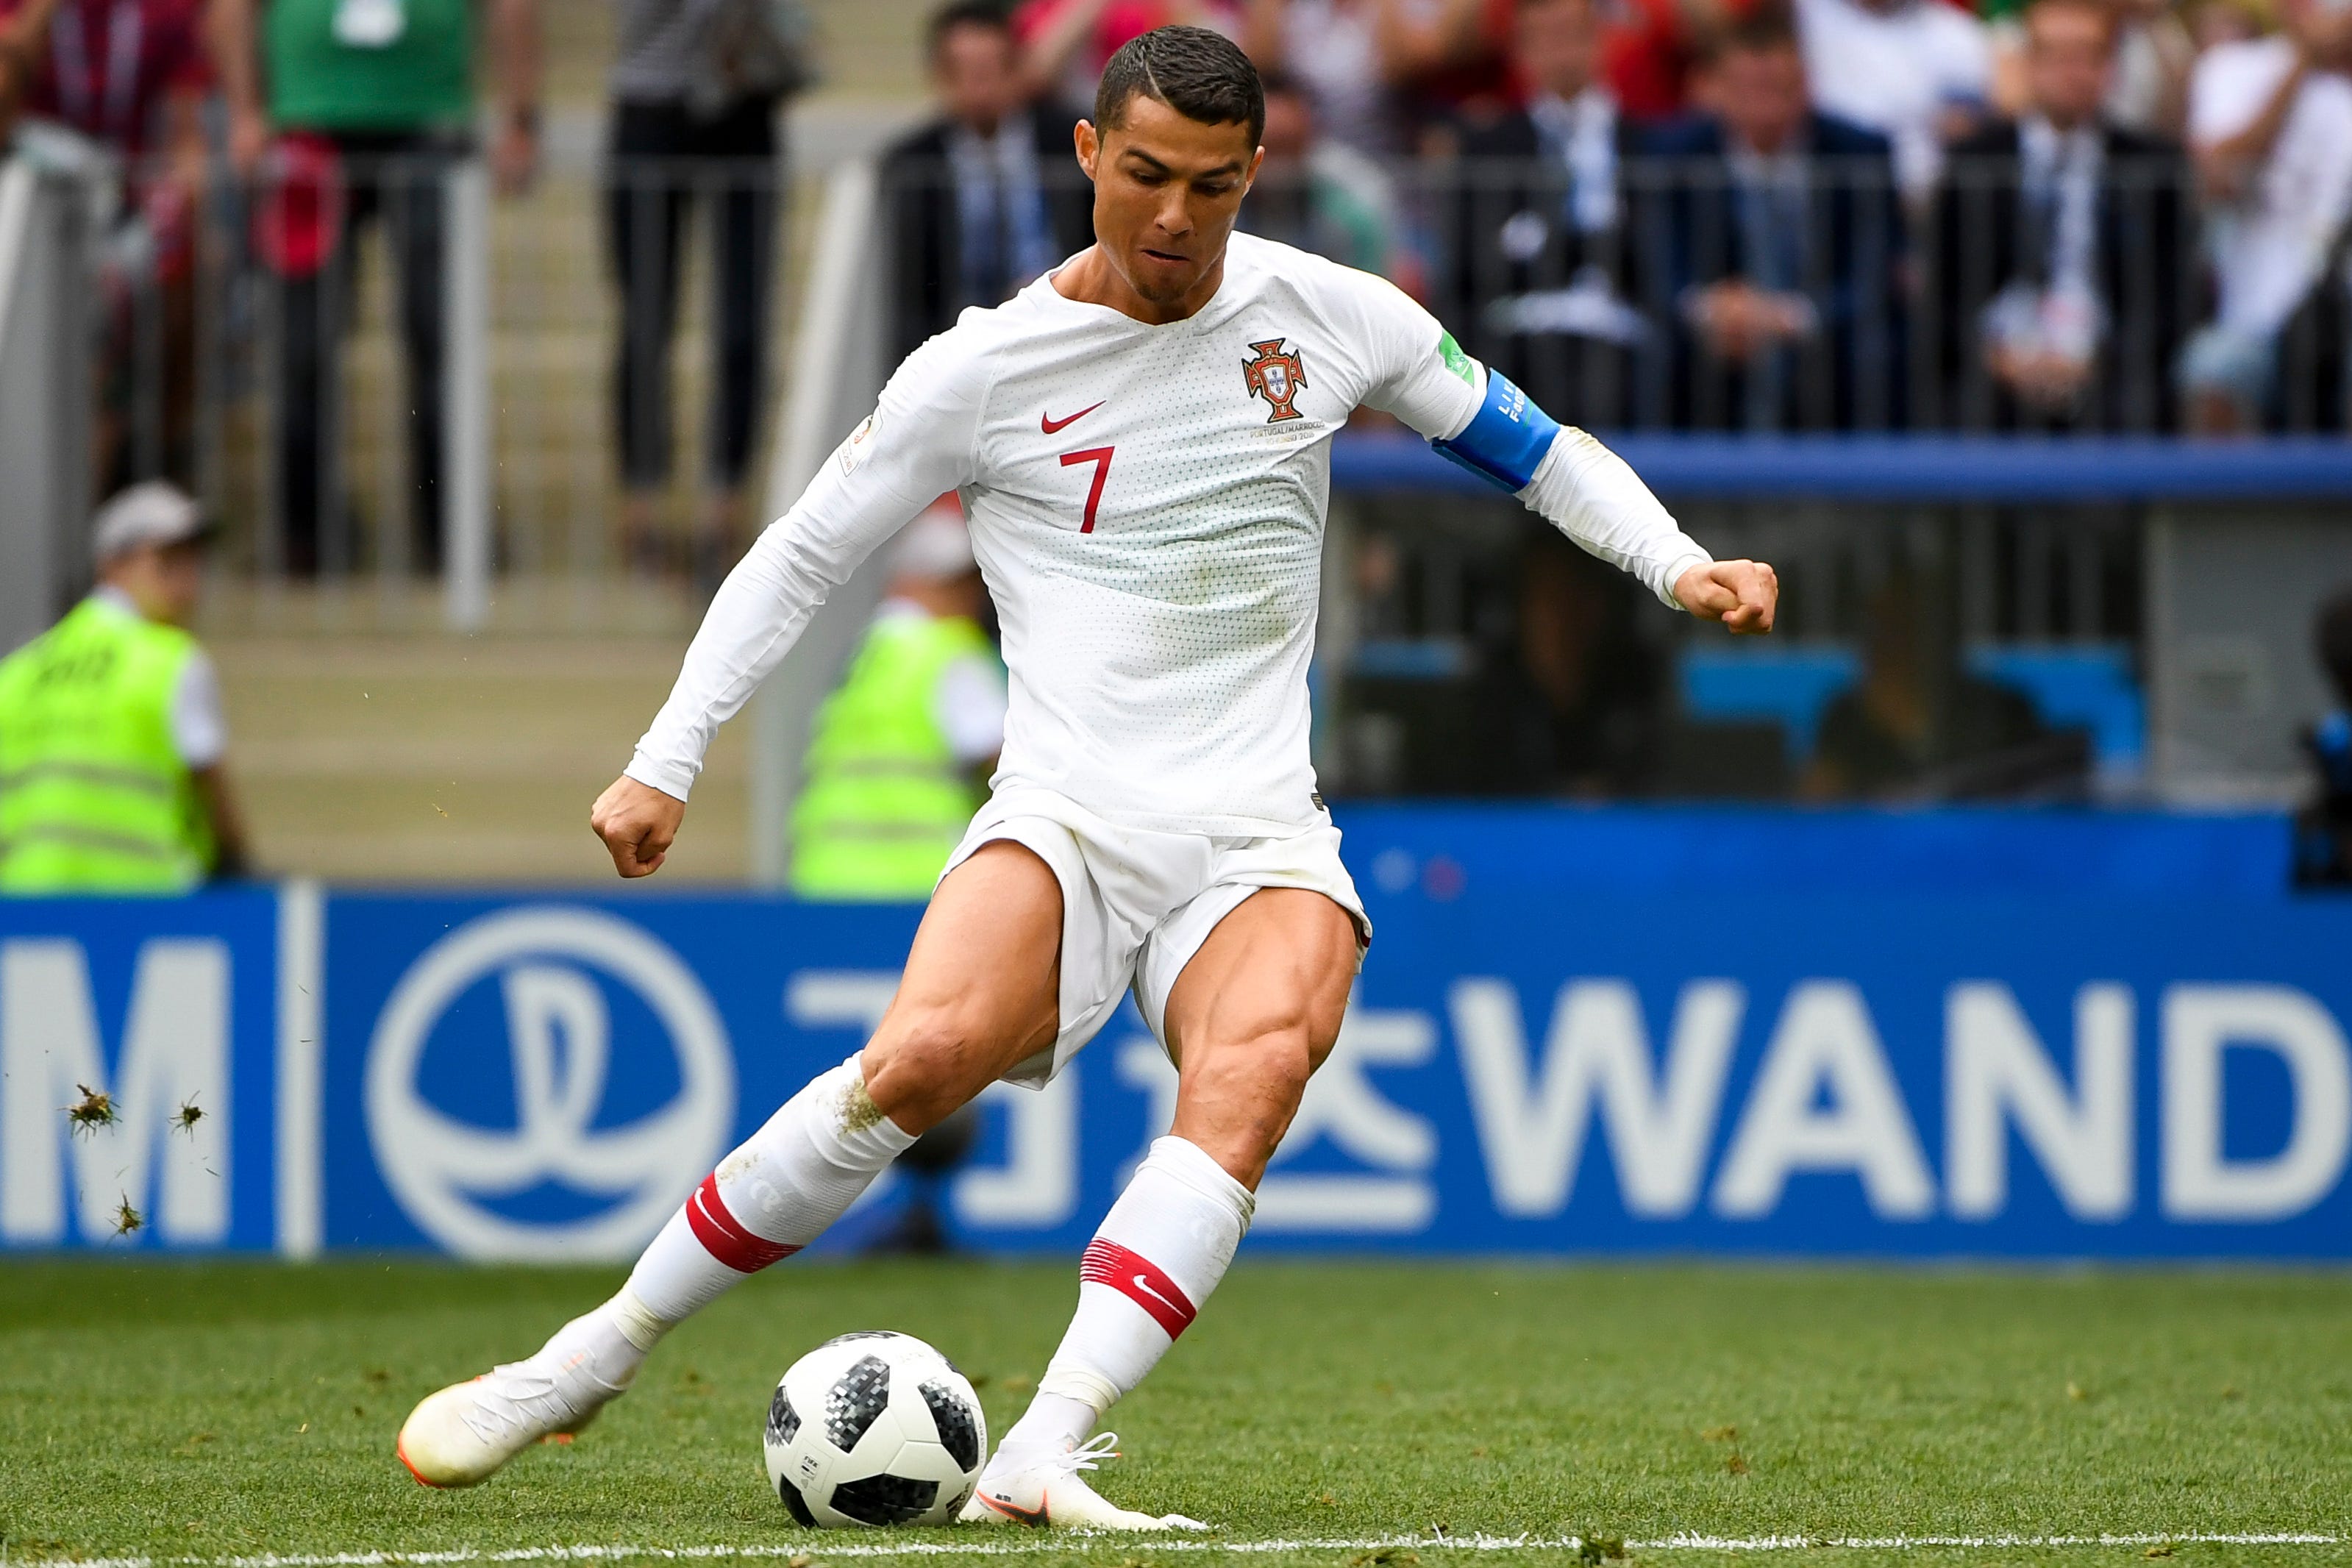 Explaining Cristiano Ronaldo S Knuckleball Free Kick Technique Via Biomechanics And Sports Science By Dr Rajpal Brar Medium